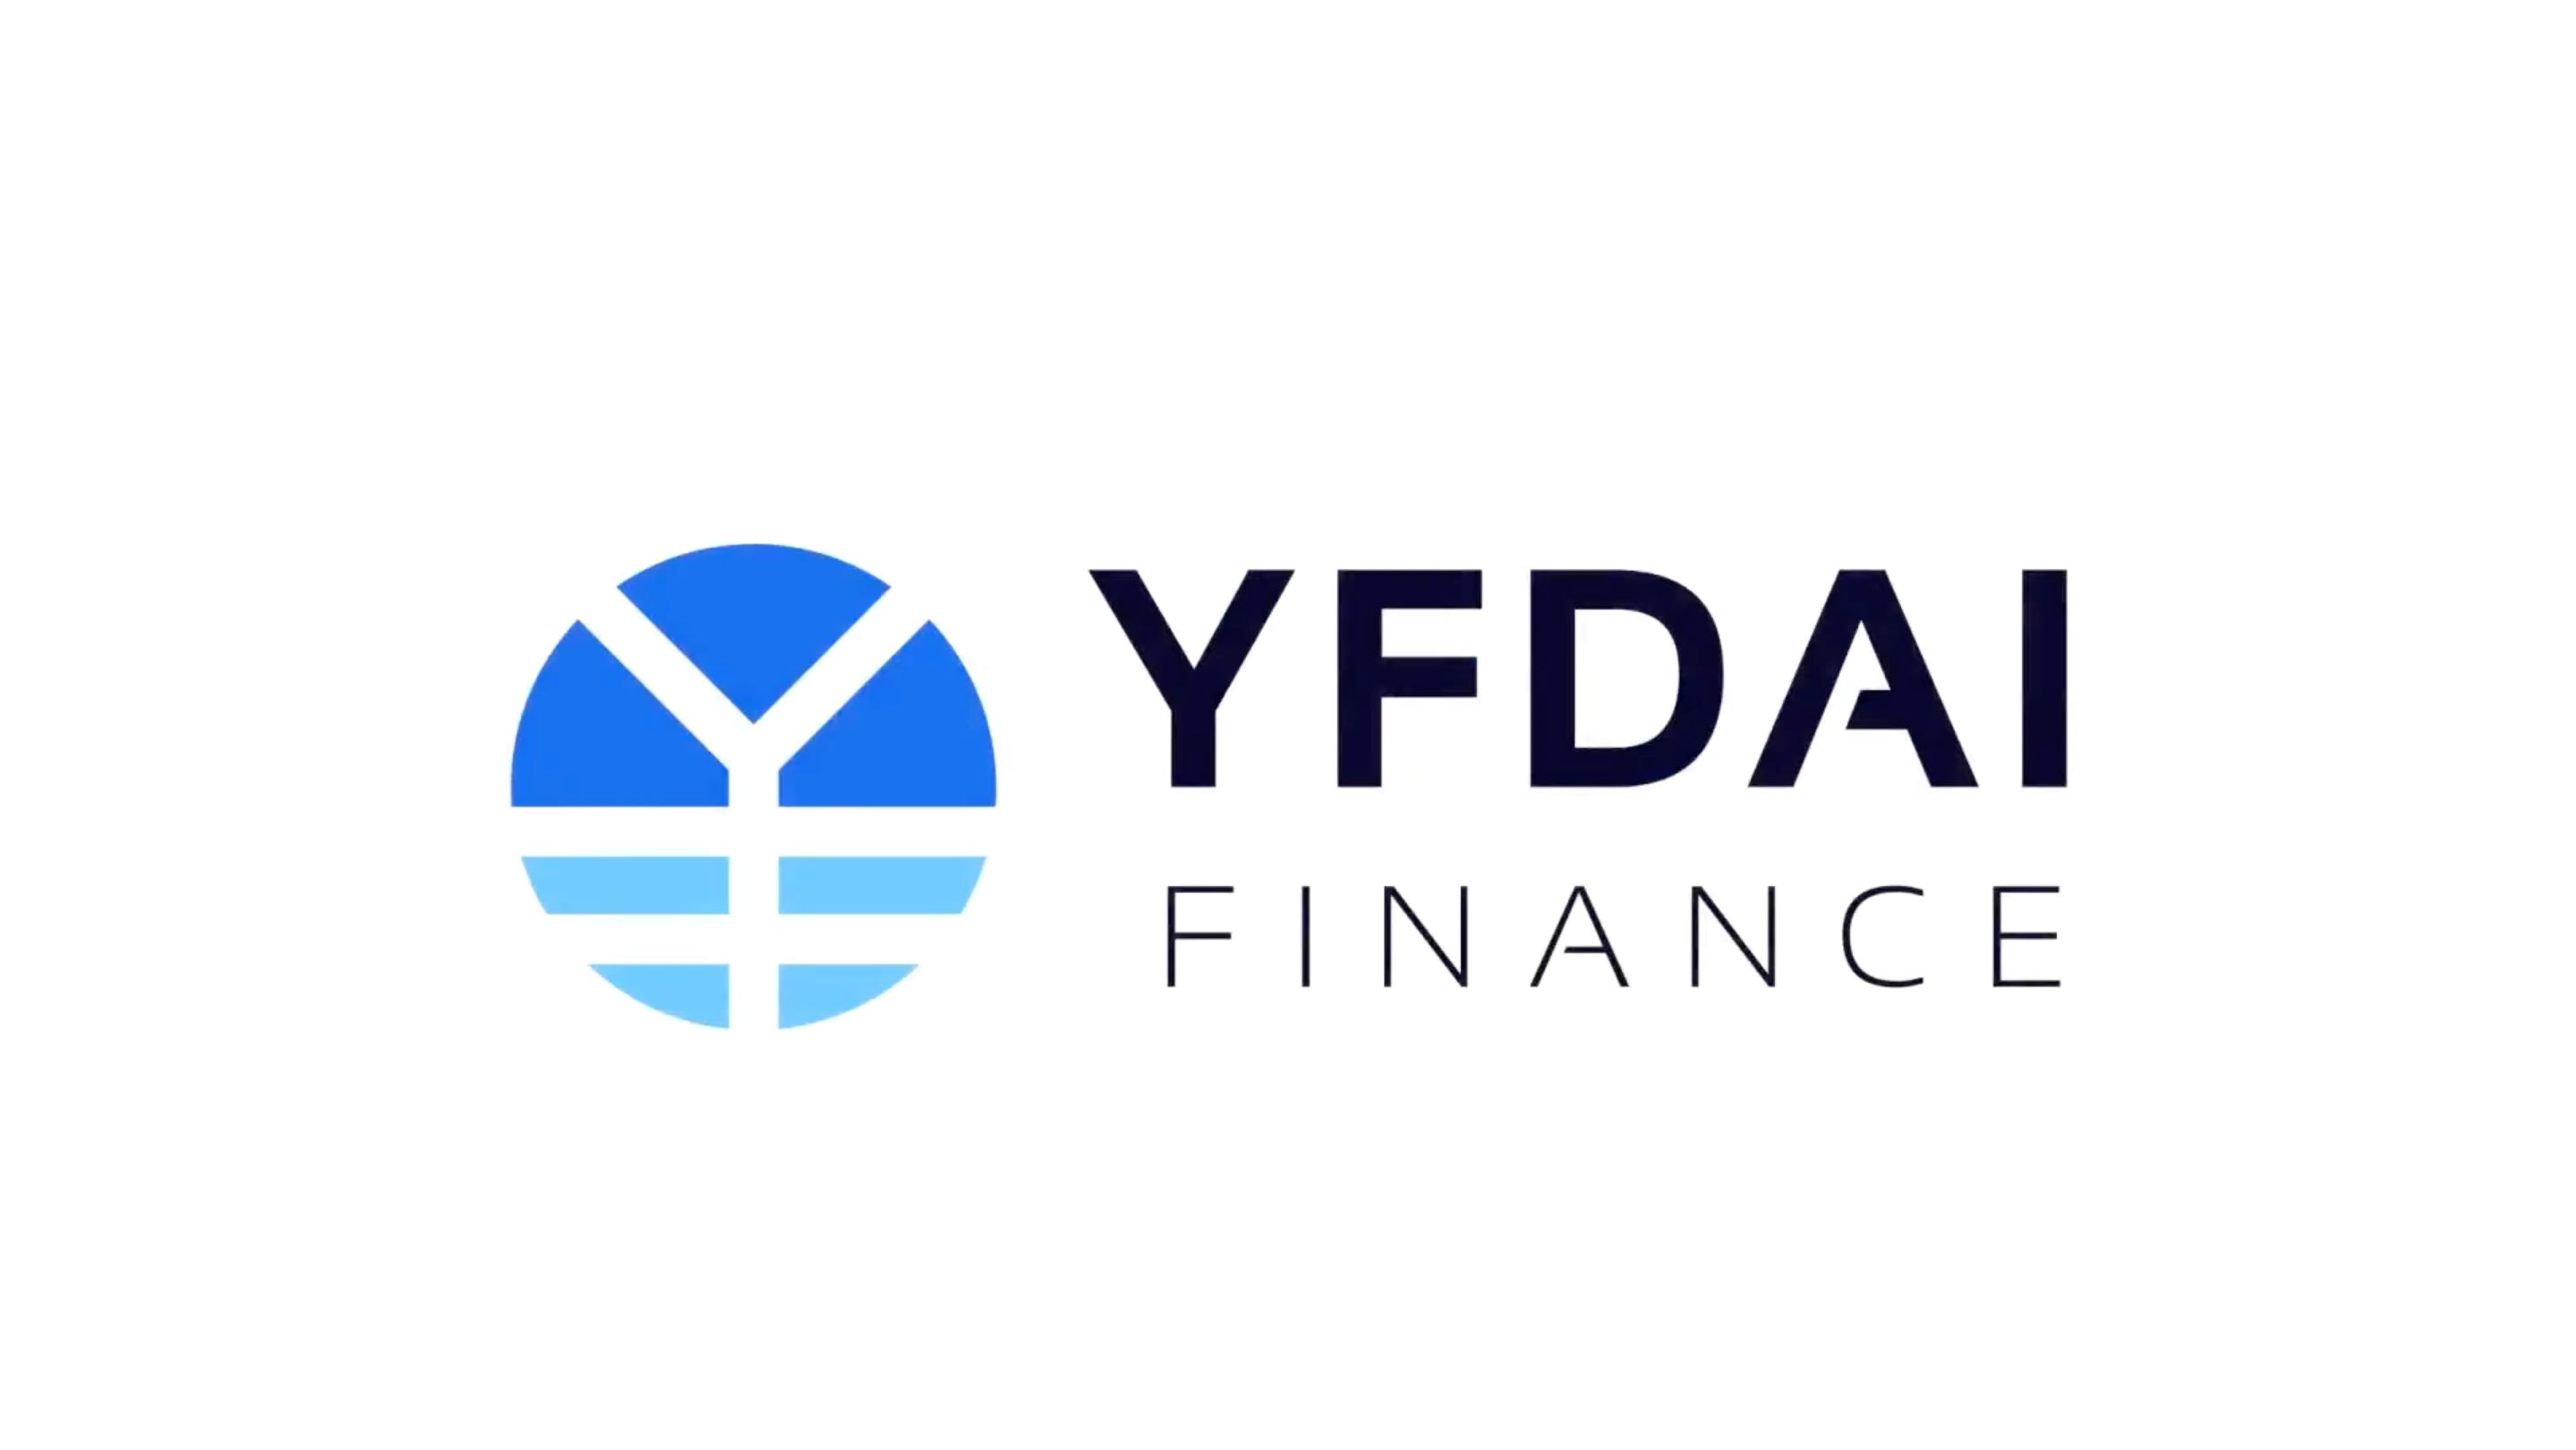 9-extraordinary-facts-about-yfdai-finance-yfdai